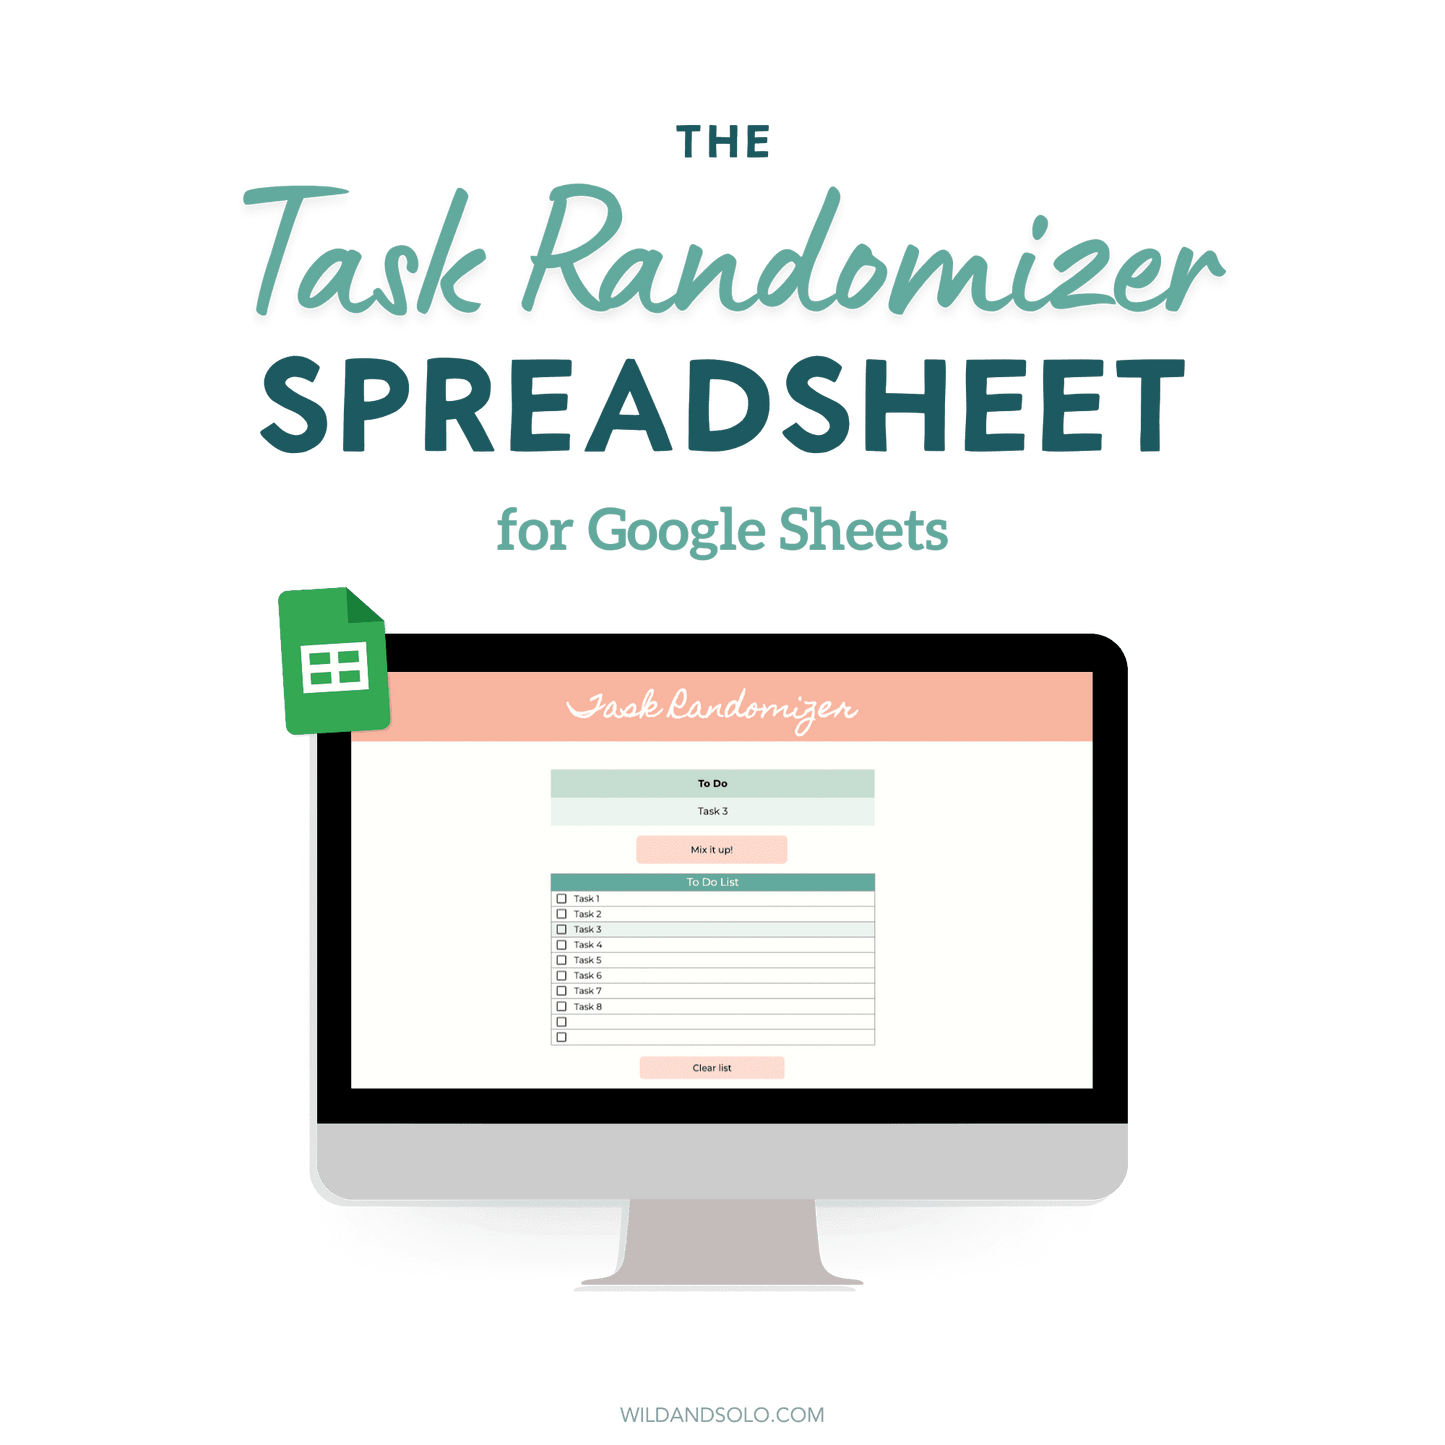 Task Randomizer Spreadsheet for Google Sheets on a laptop